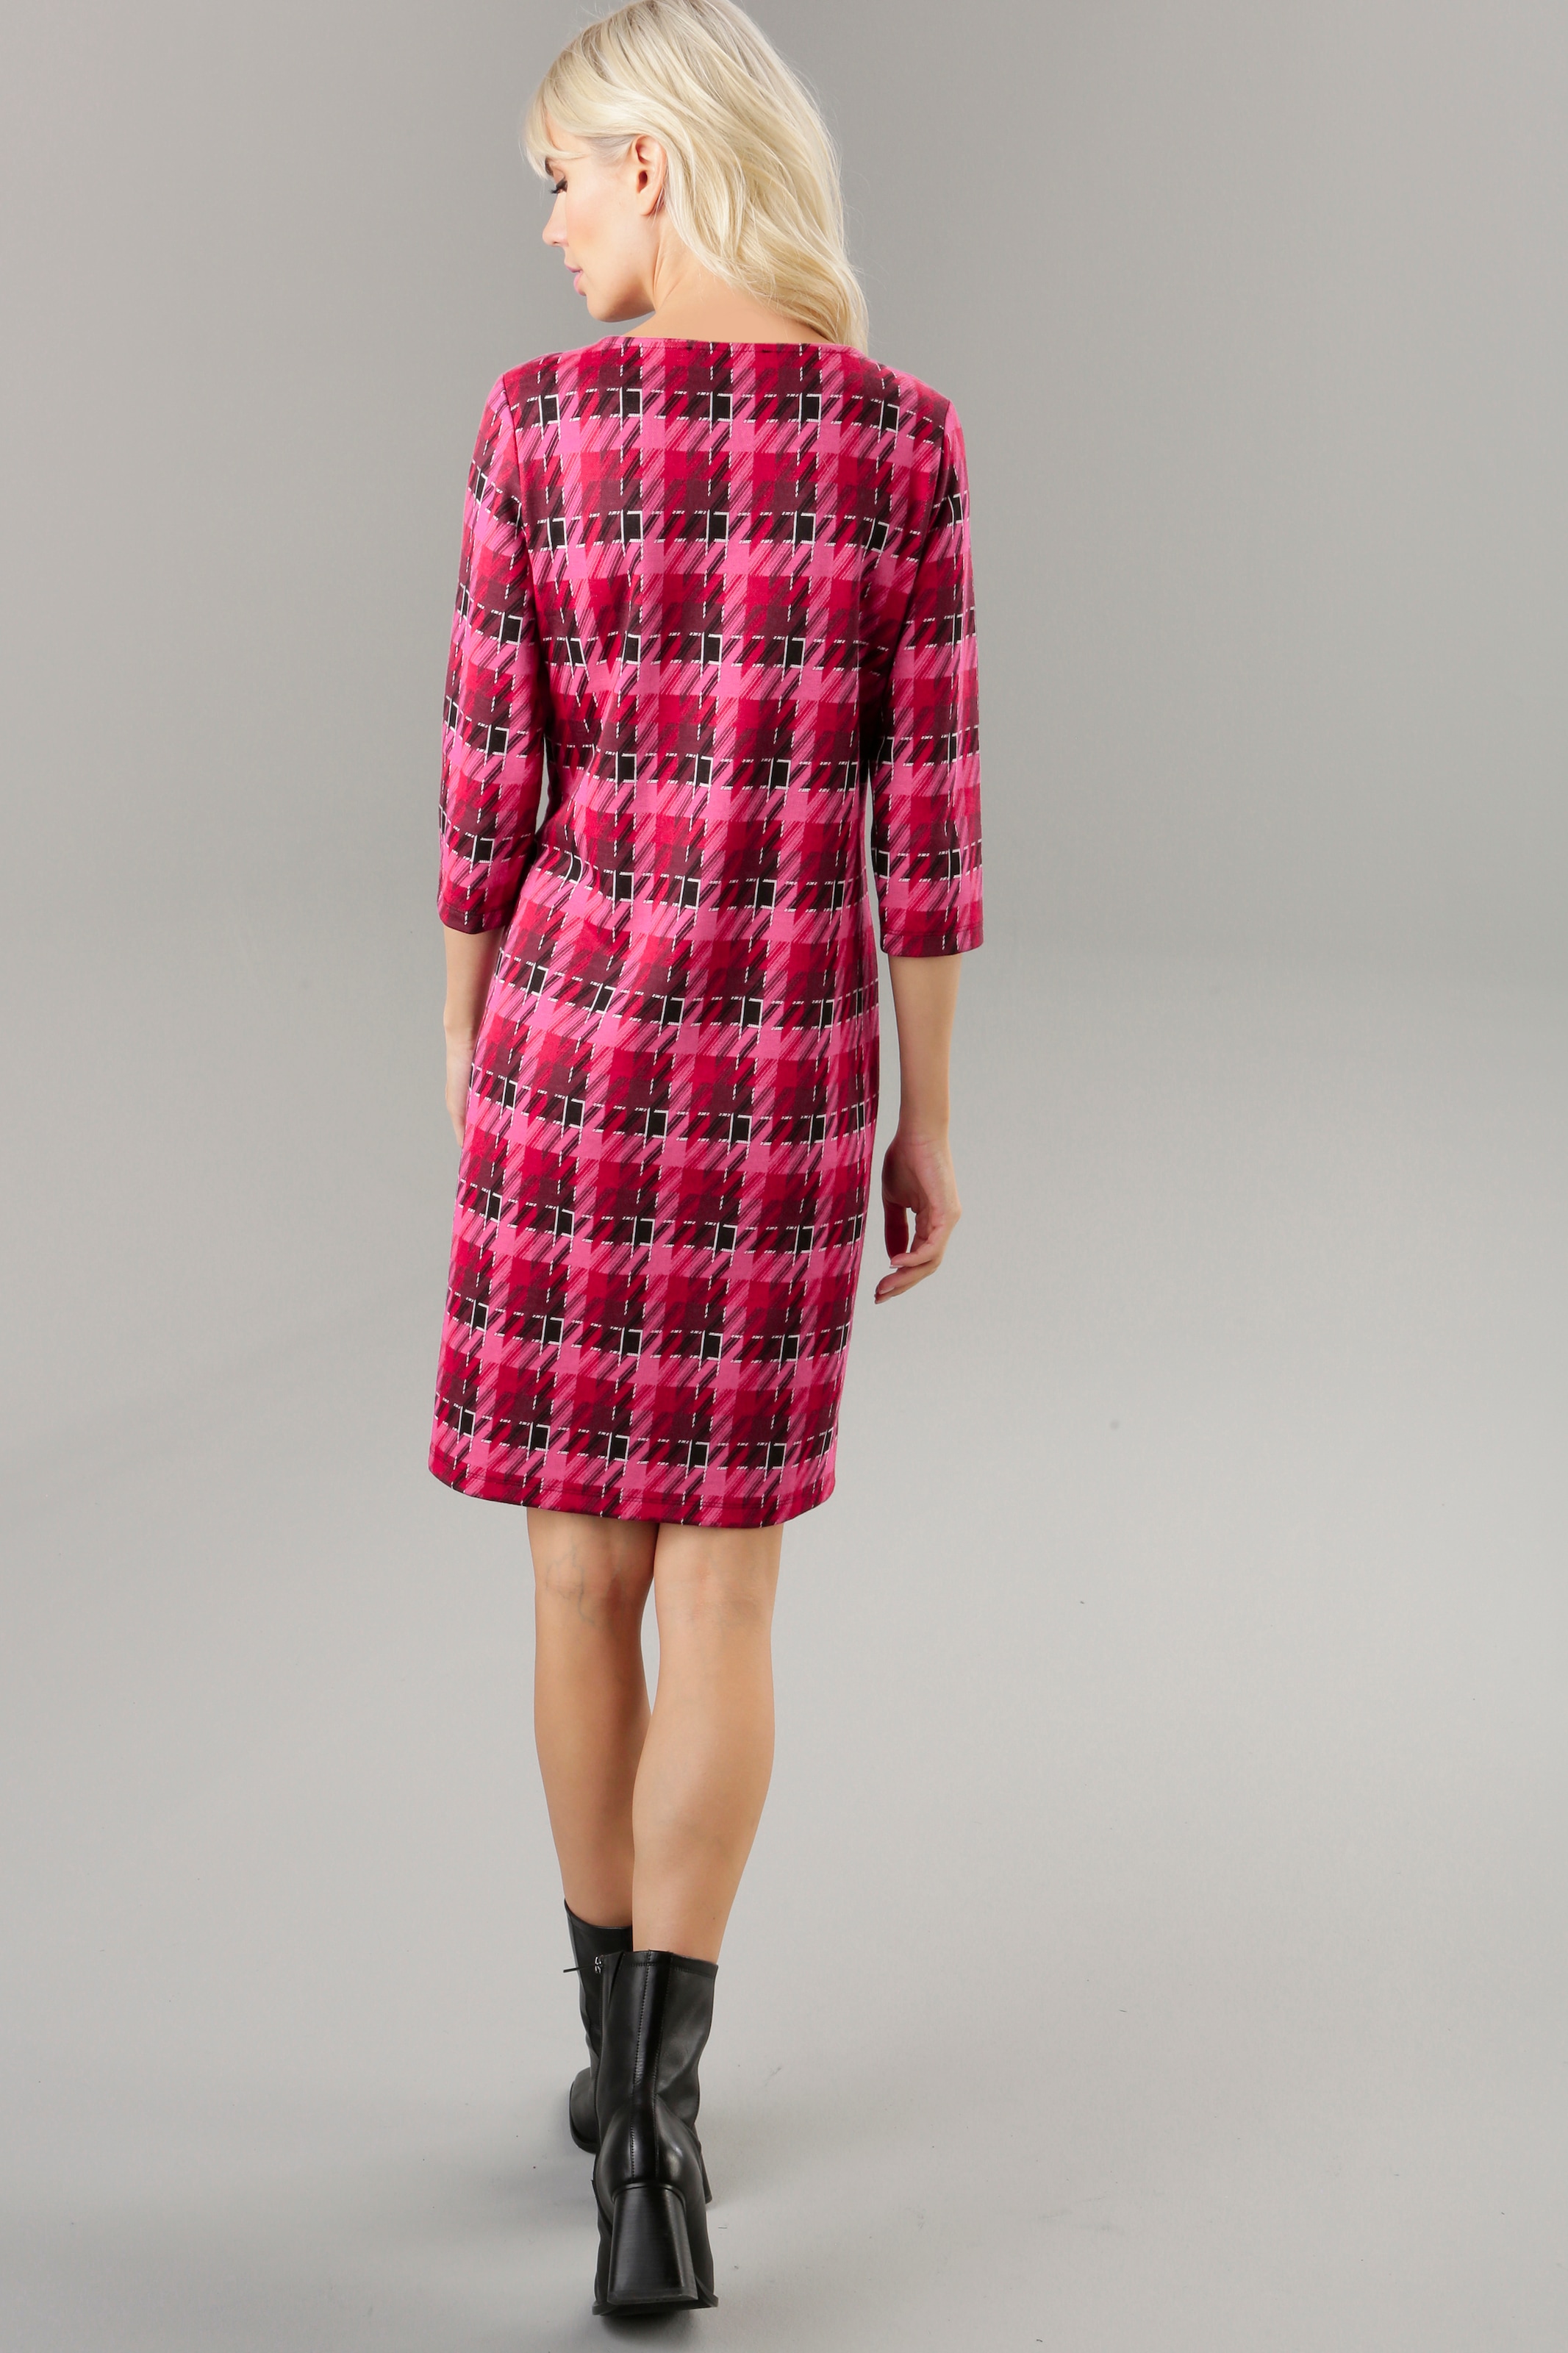 Aniston SELECTED Jerseykleid, Knallfarben OTTO bestellen Allover-Muster in mit bei trendy online